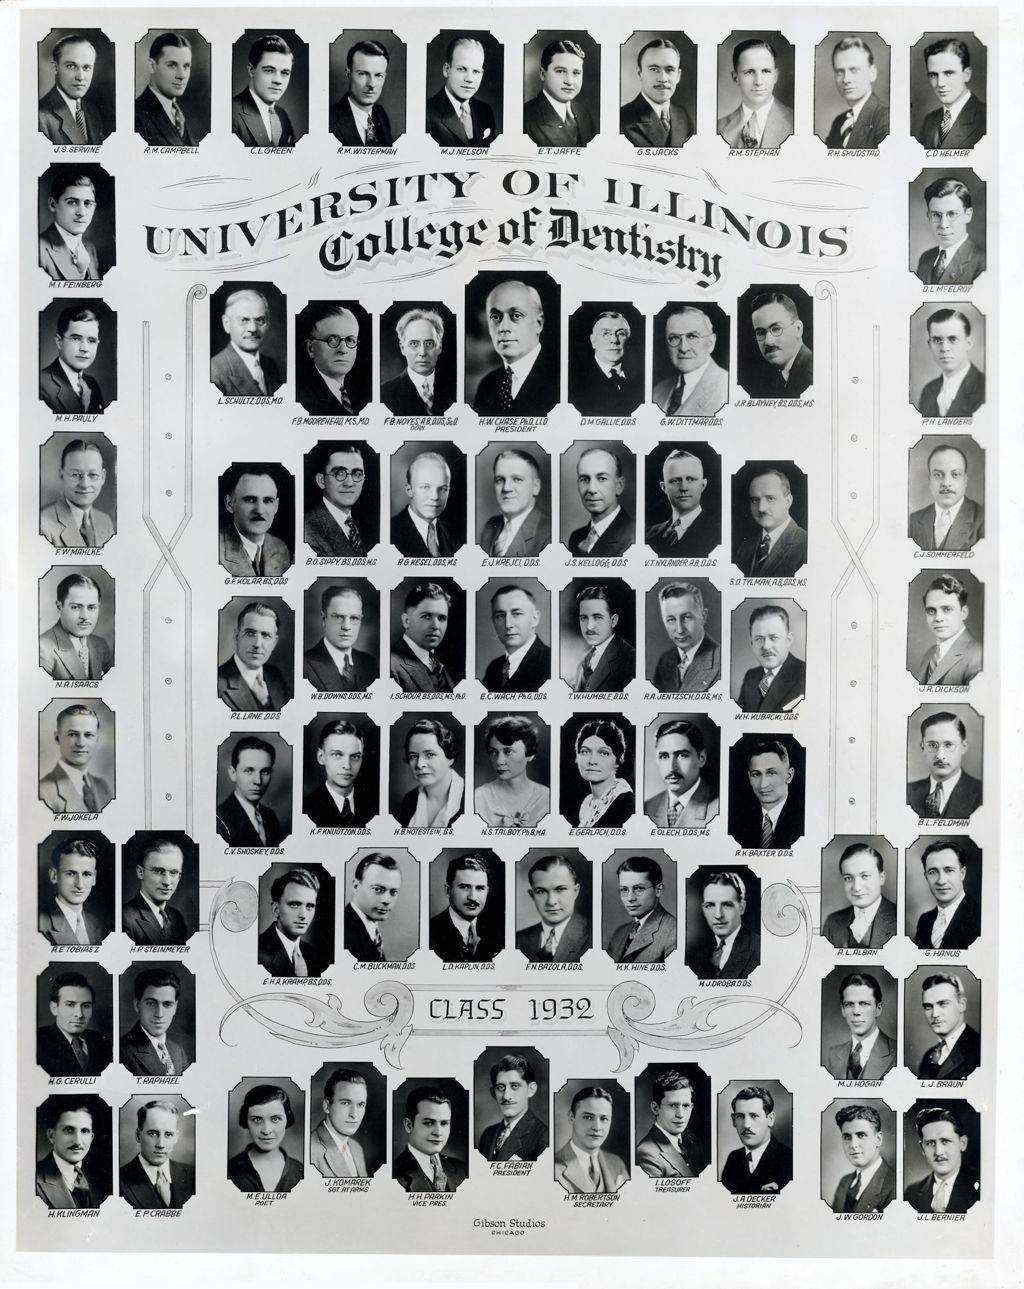 1932 graduating class, University of Illinois College of Dentistry